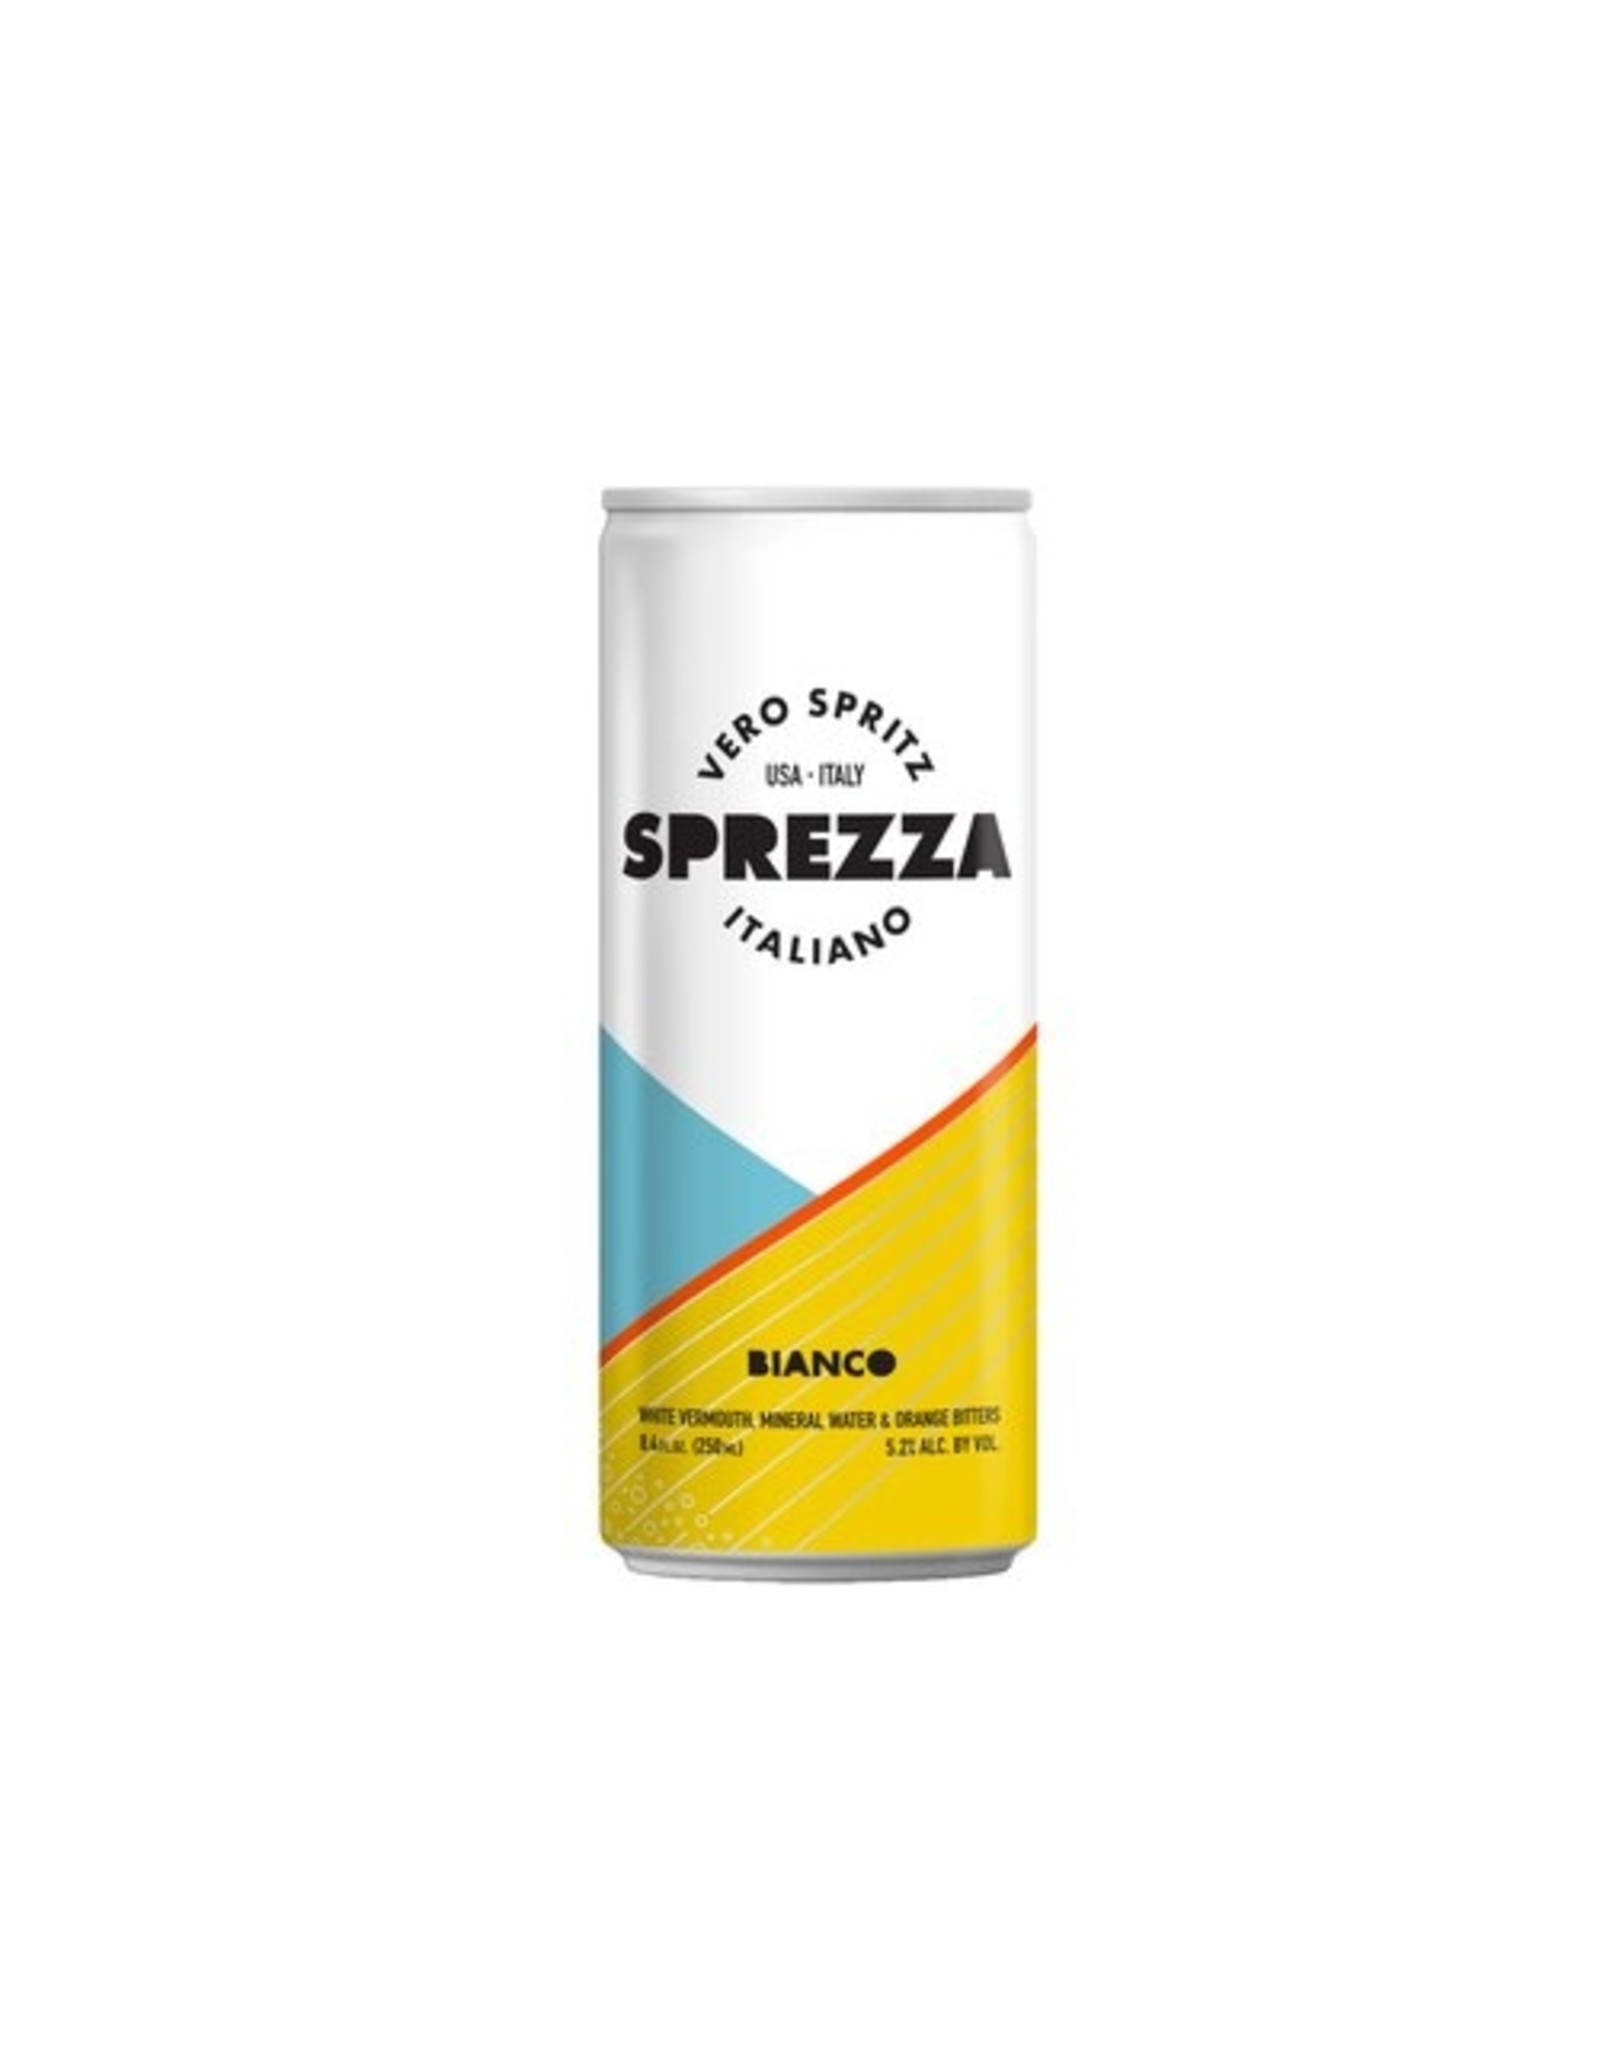 Sprezza Vero Bianco Spritz Single